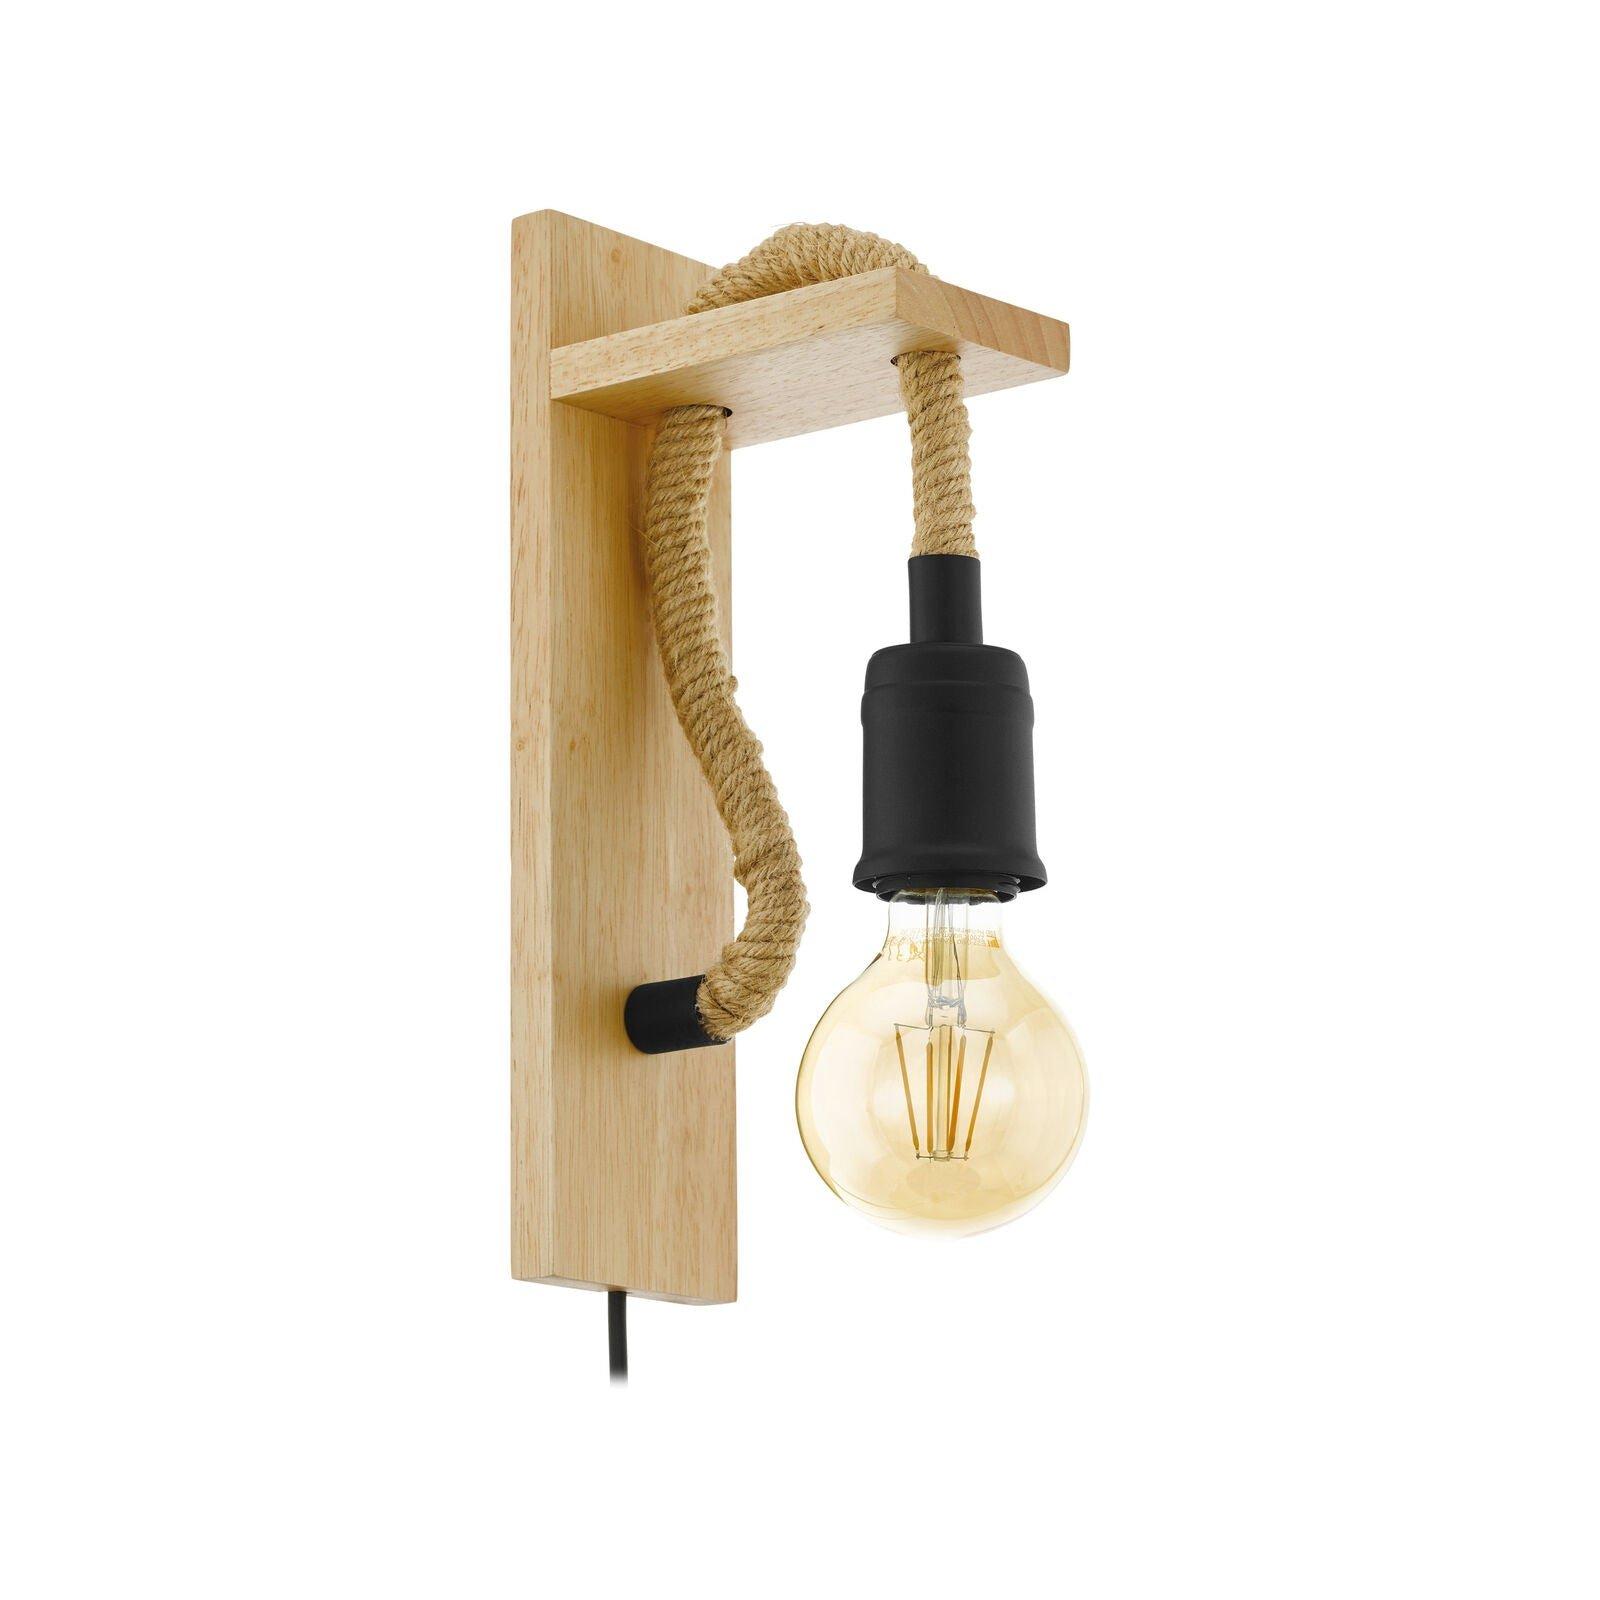 LED Wall Light / Sconce Modern Wood & Rope Hangman Lamp 1 x 10W E27 Bulb